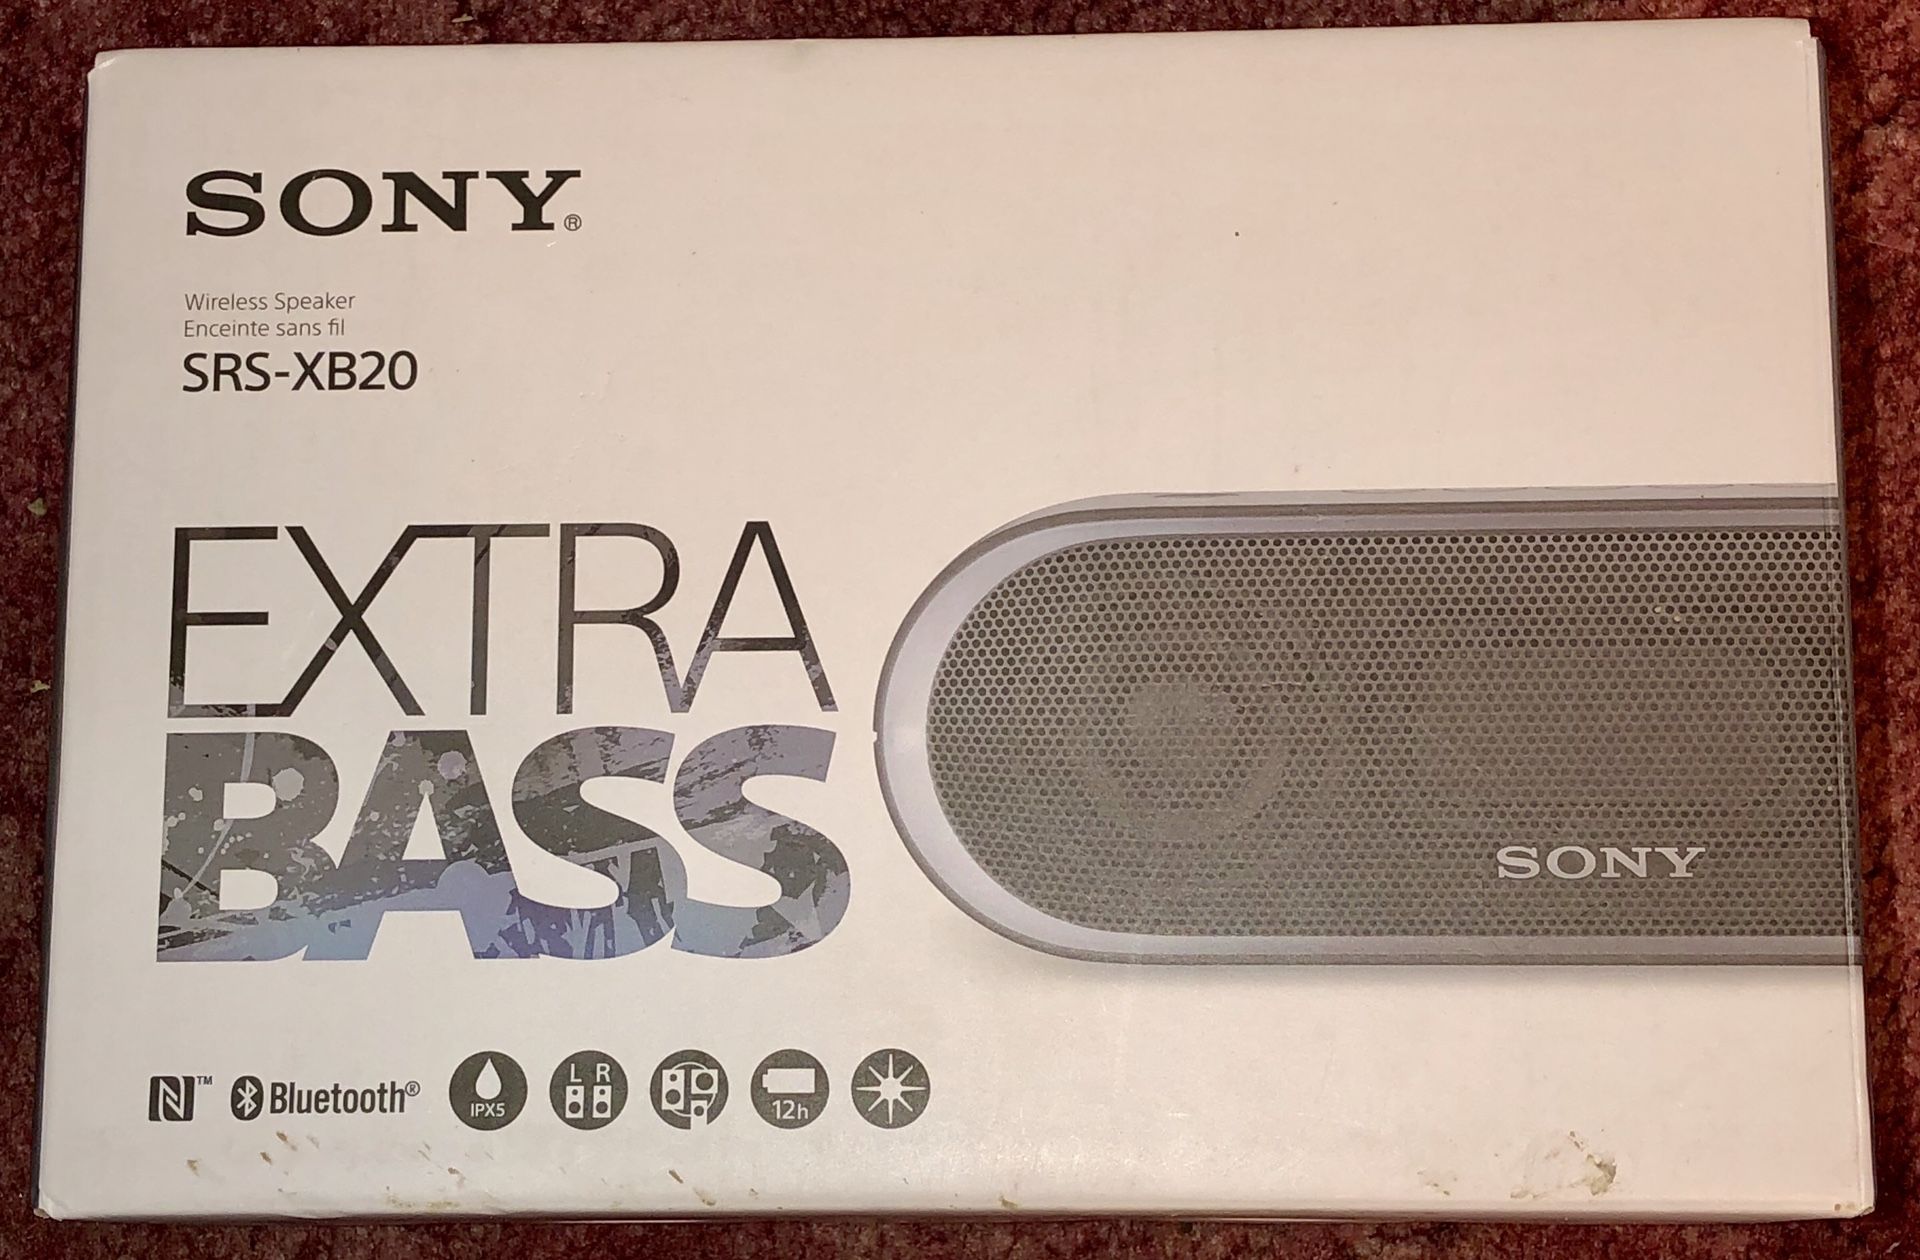 New Sony Wireless Speakers